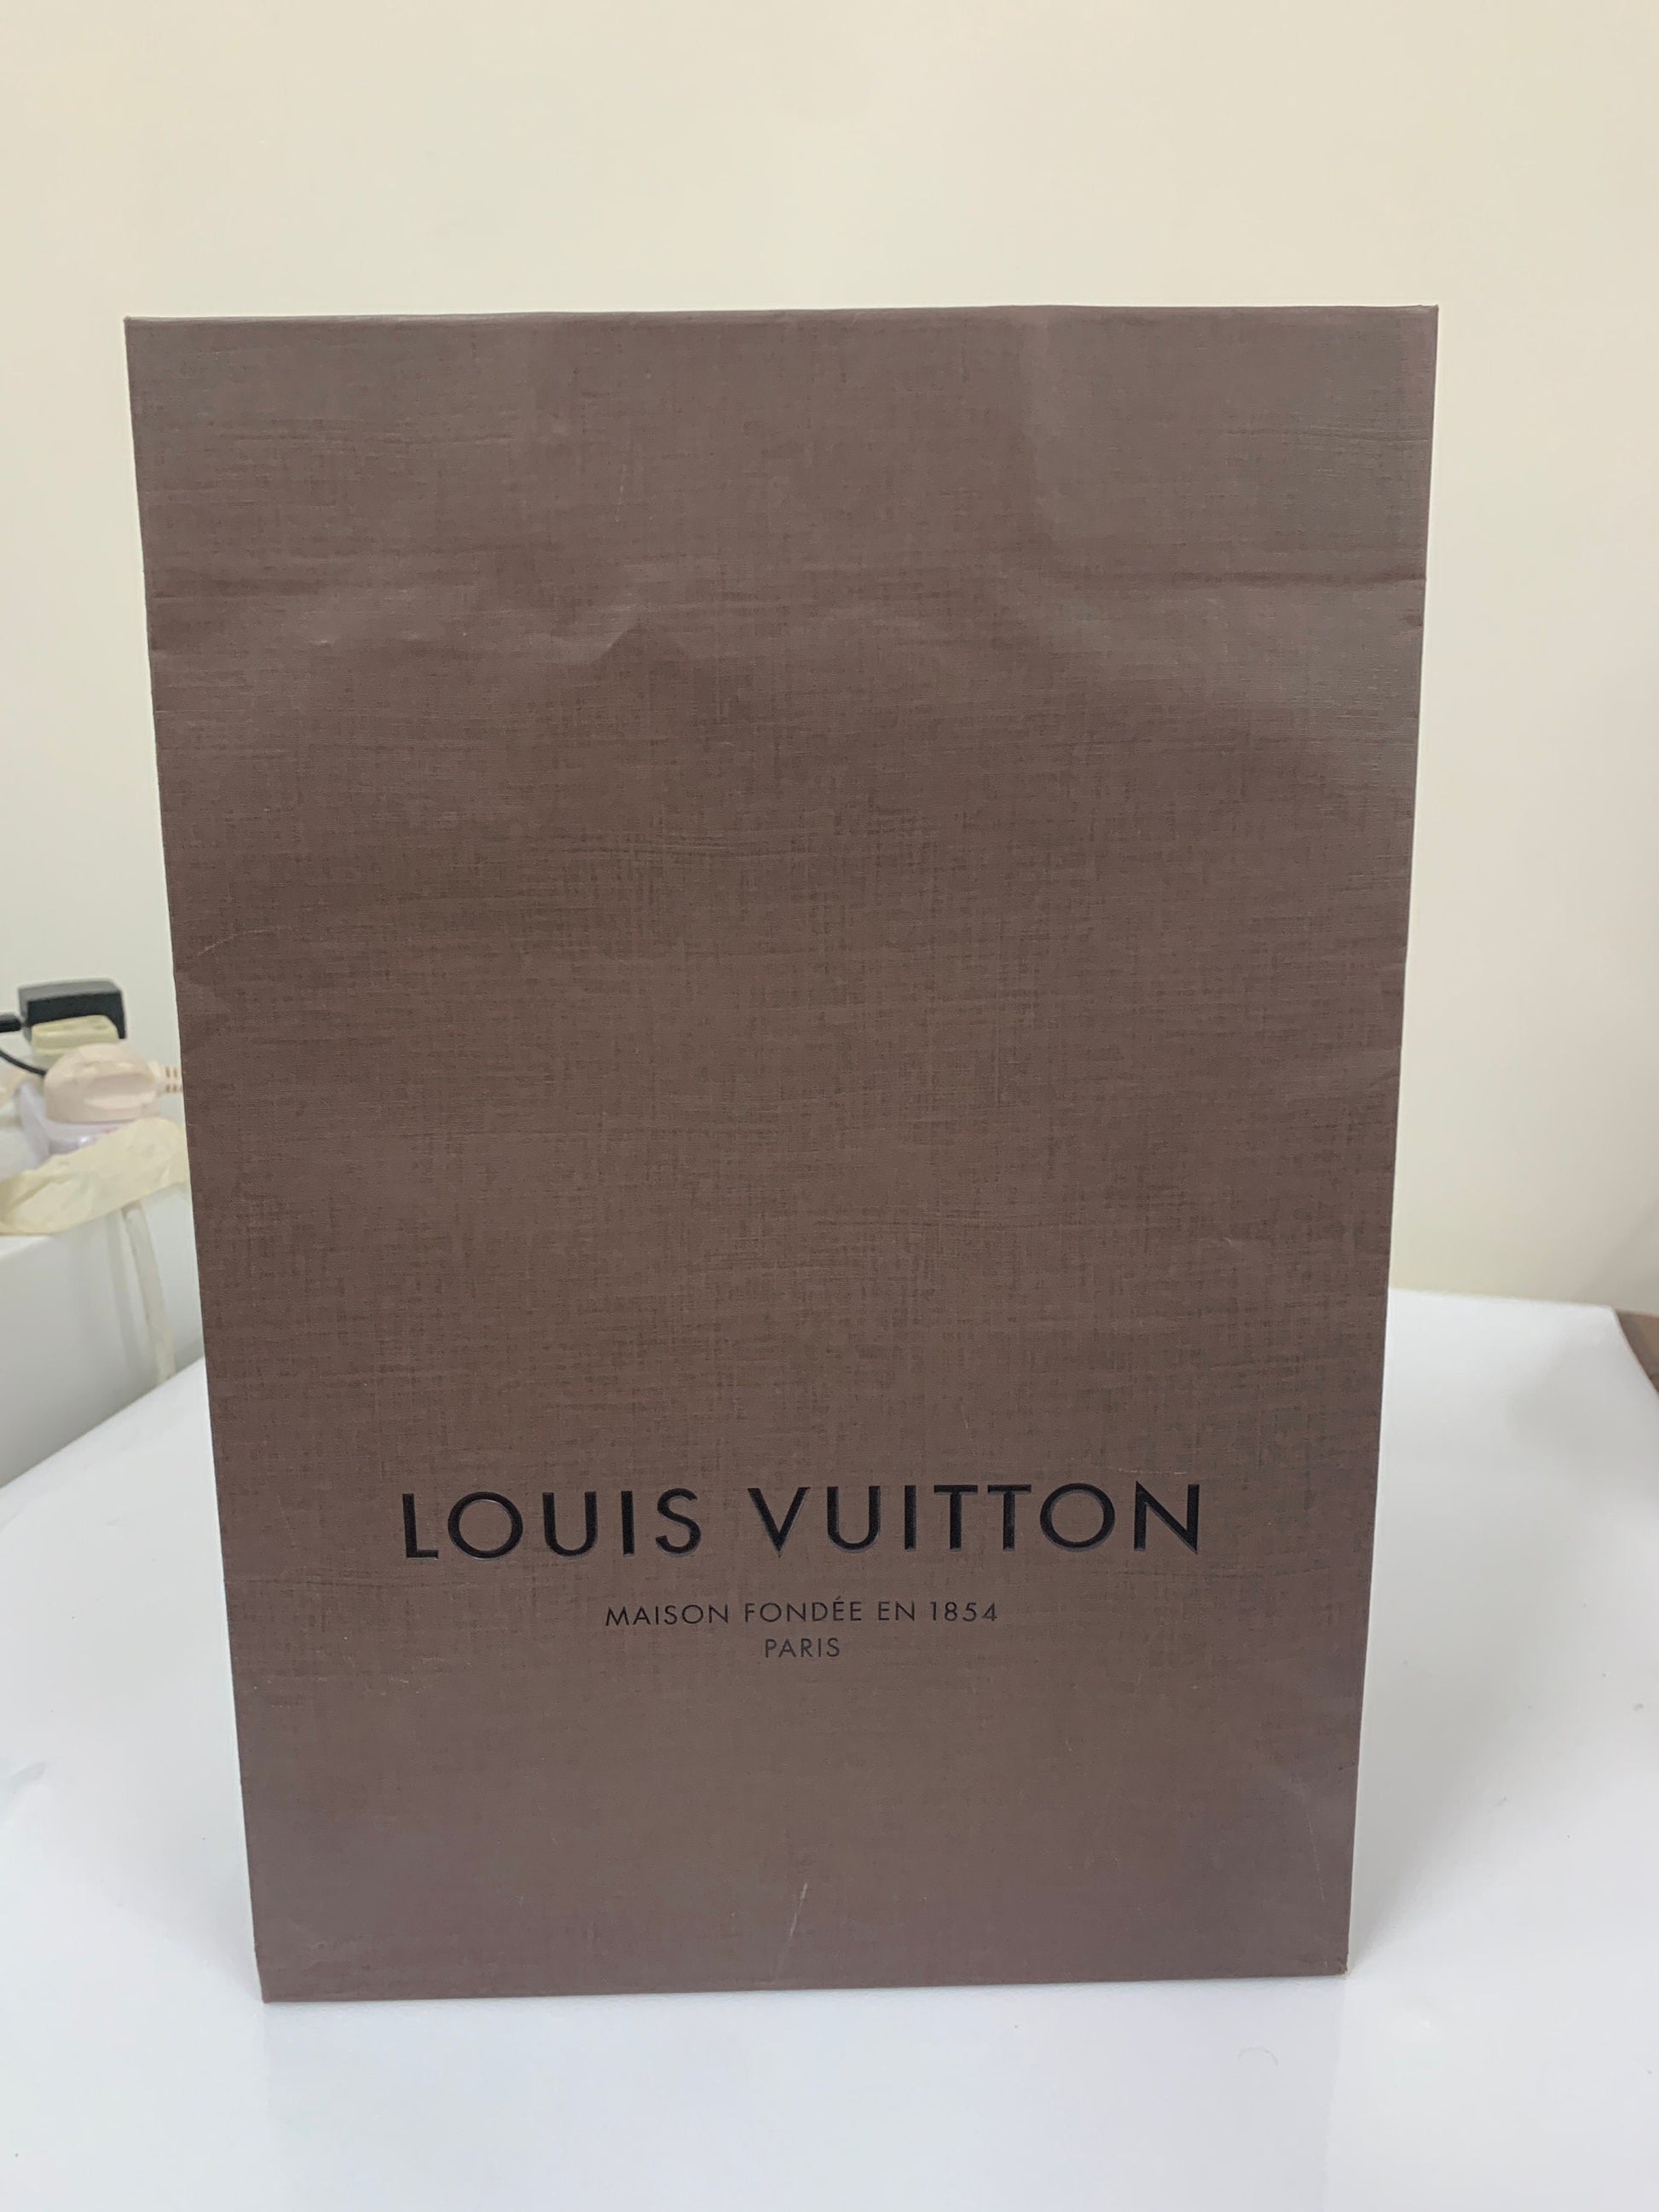 LOUIS VUITTON Authentic Paper Gift Shopping Bag Medium SIZE 14